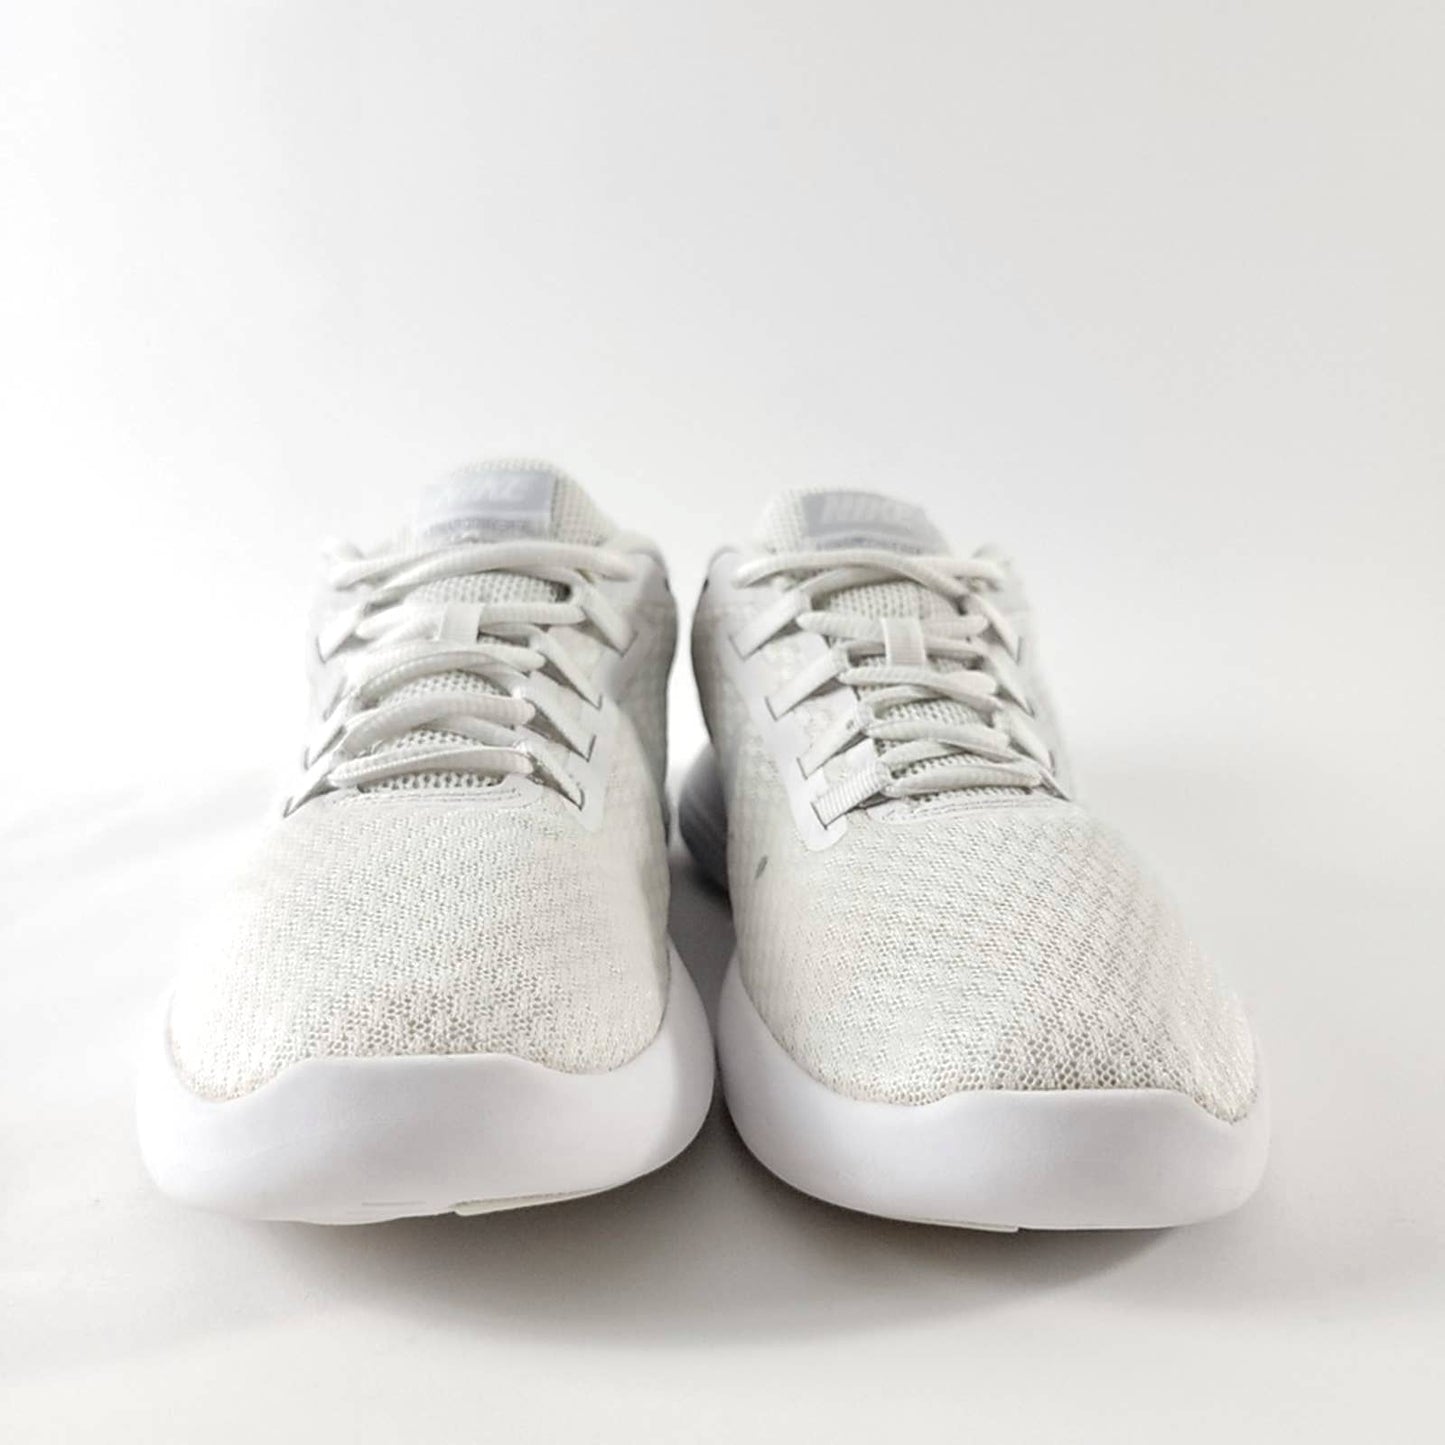 Nike LunarConverge Running Shoes - 8/9.5